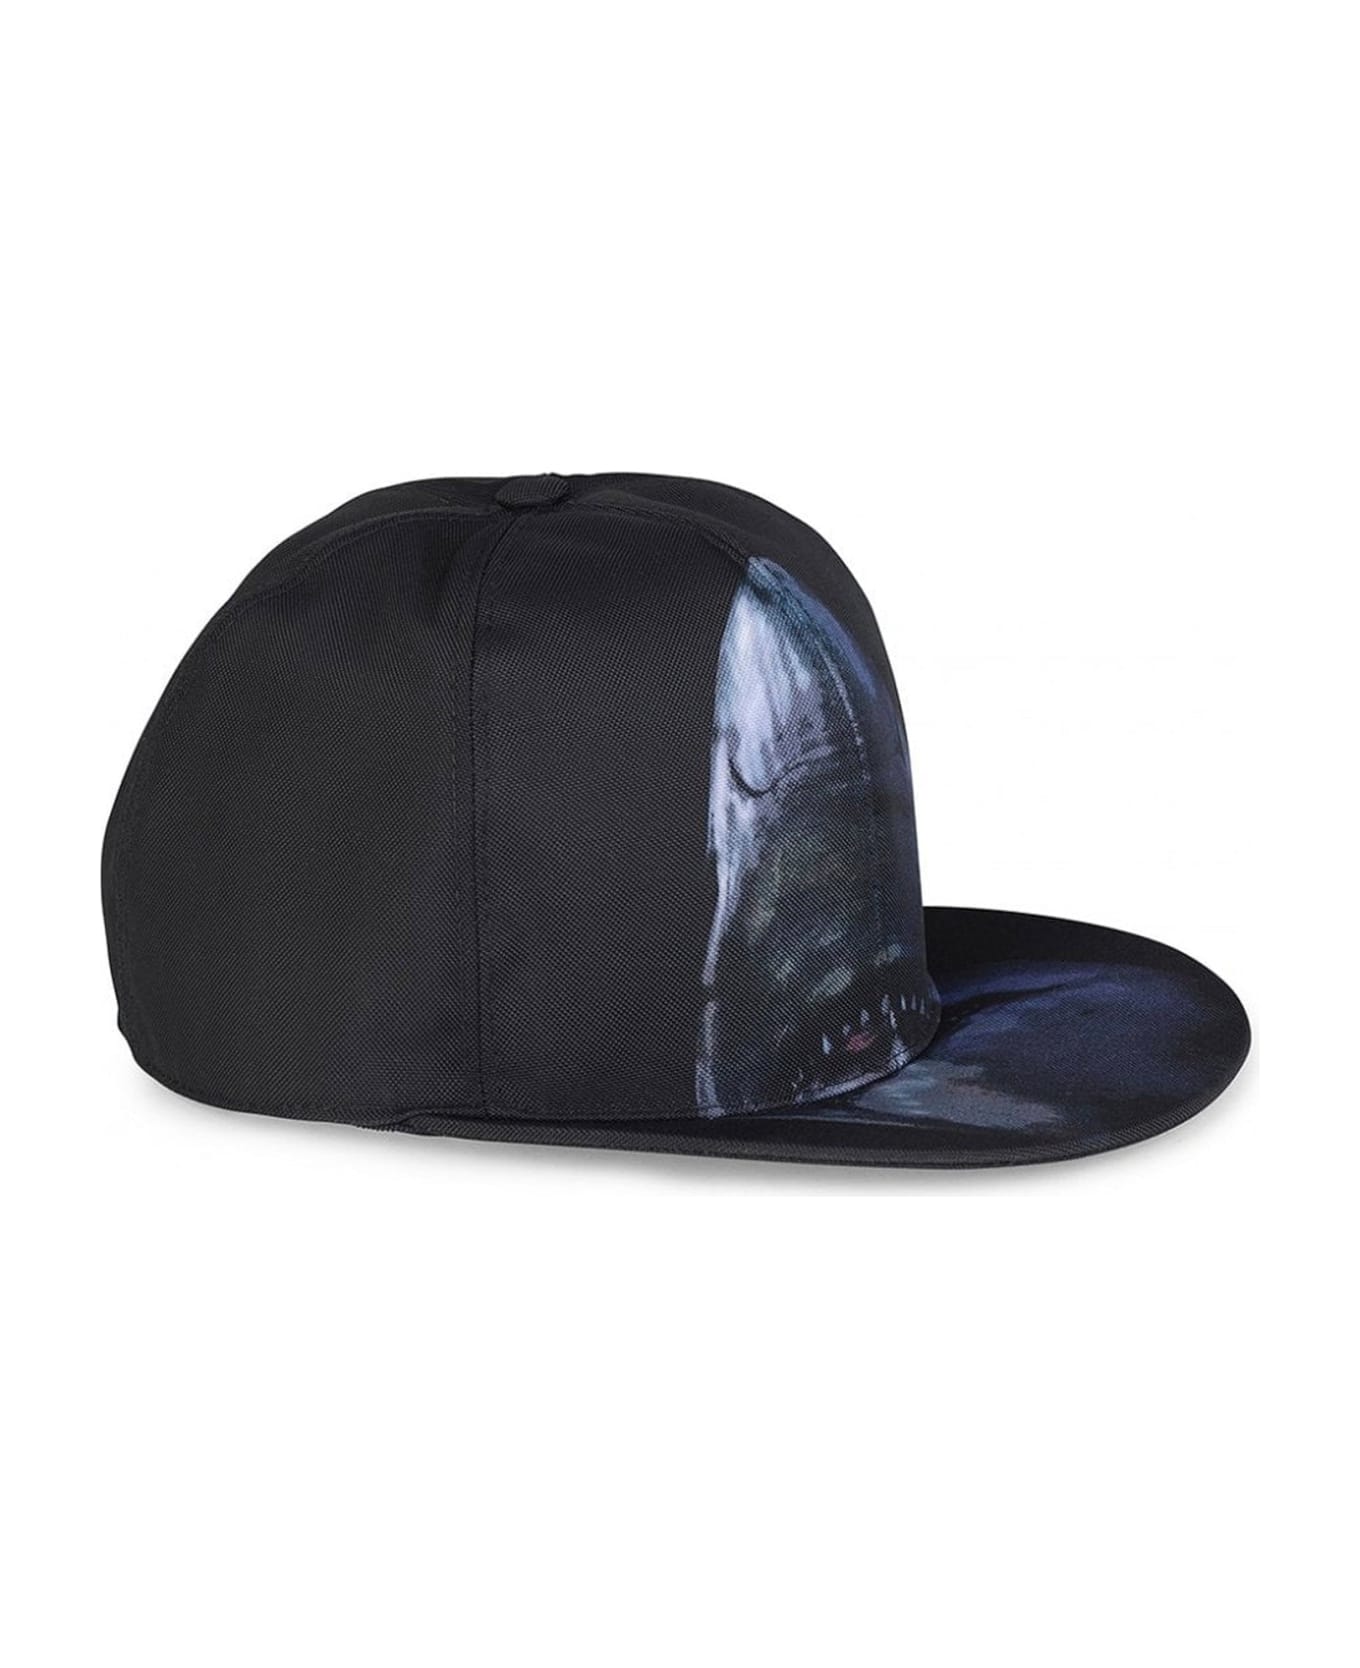 Givenchy Shark Print Cap - Black 帽子